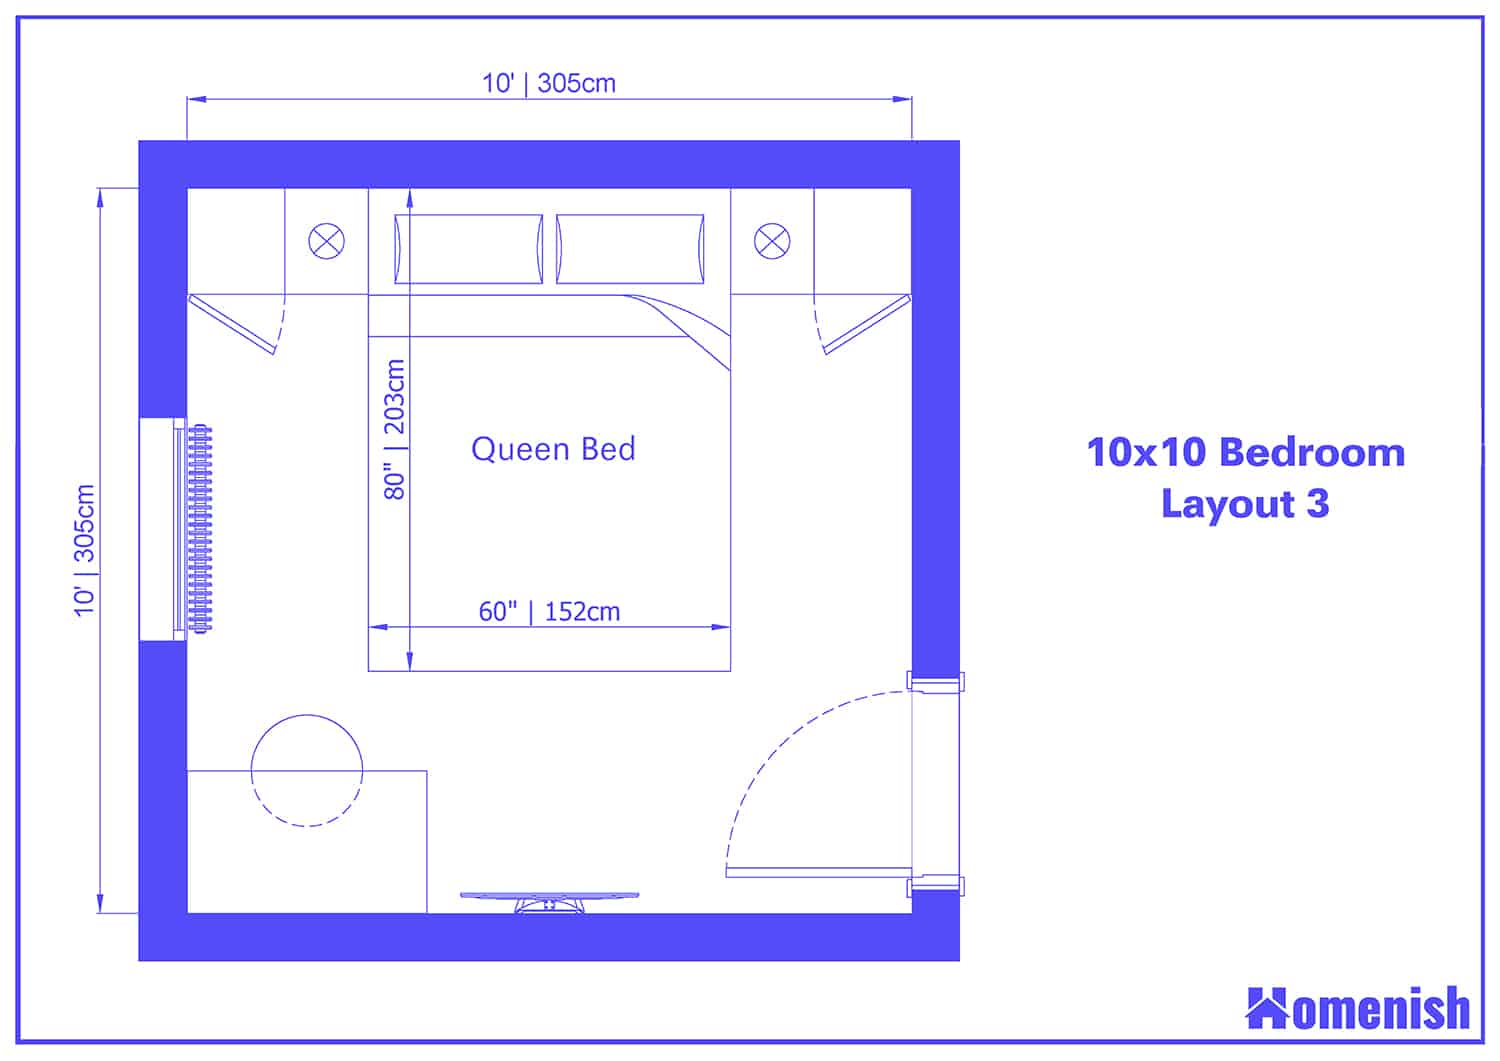 10x10 Bedroom Layout 3